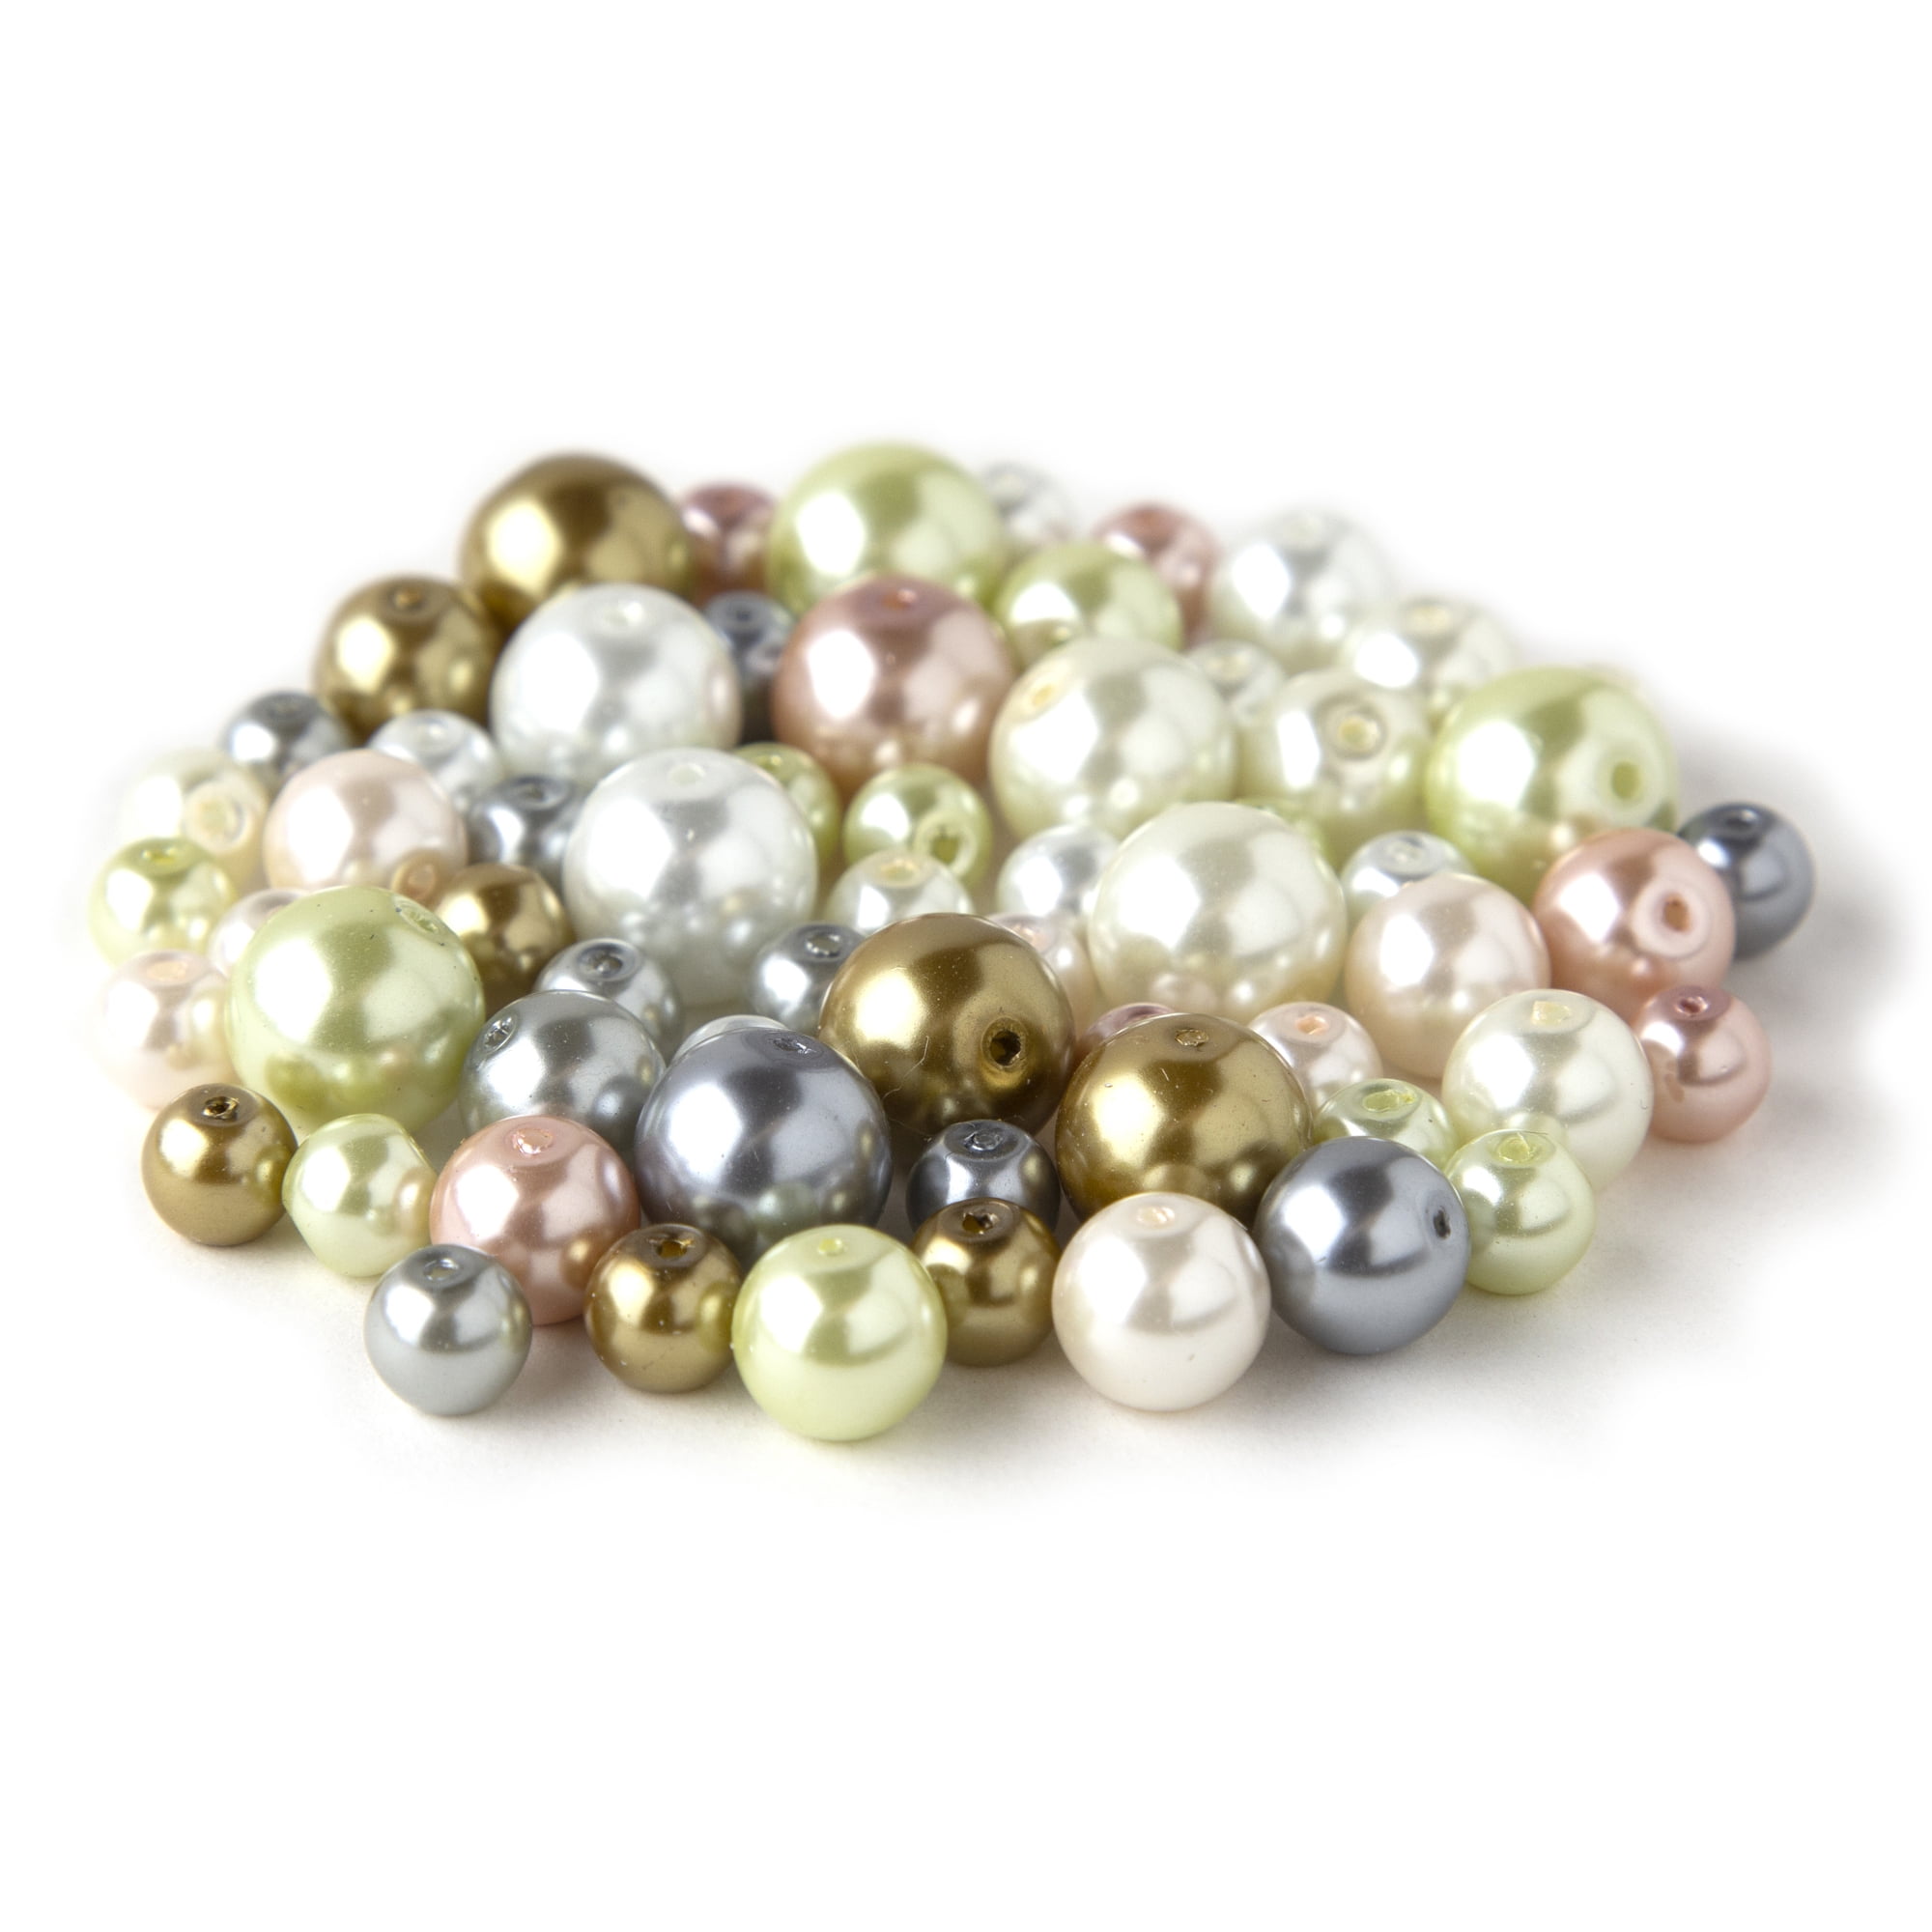 10 black acrylic beads 8 mm imitation pearls